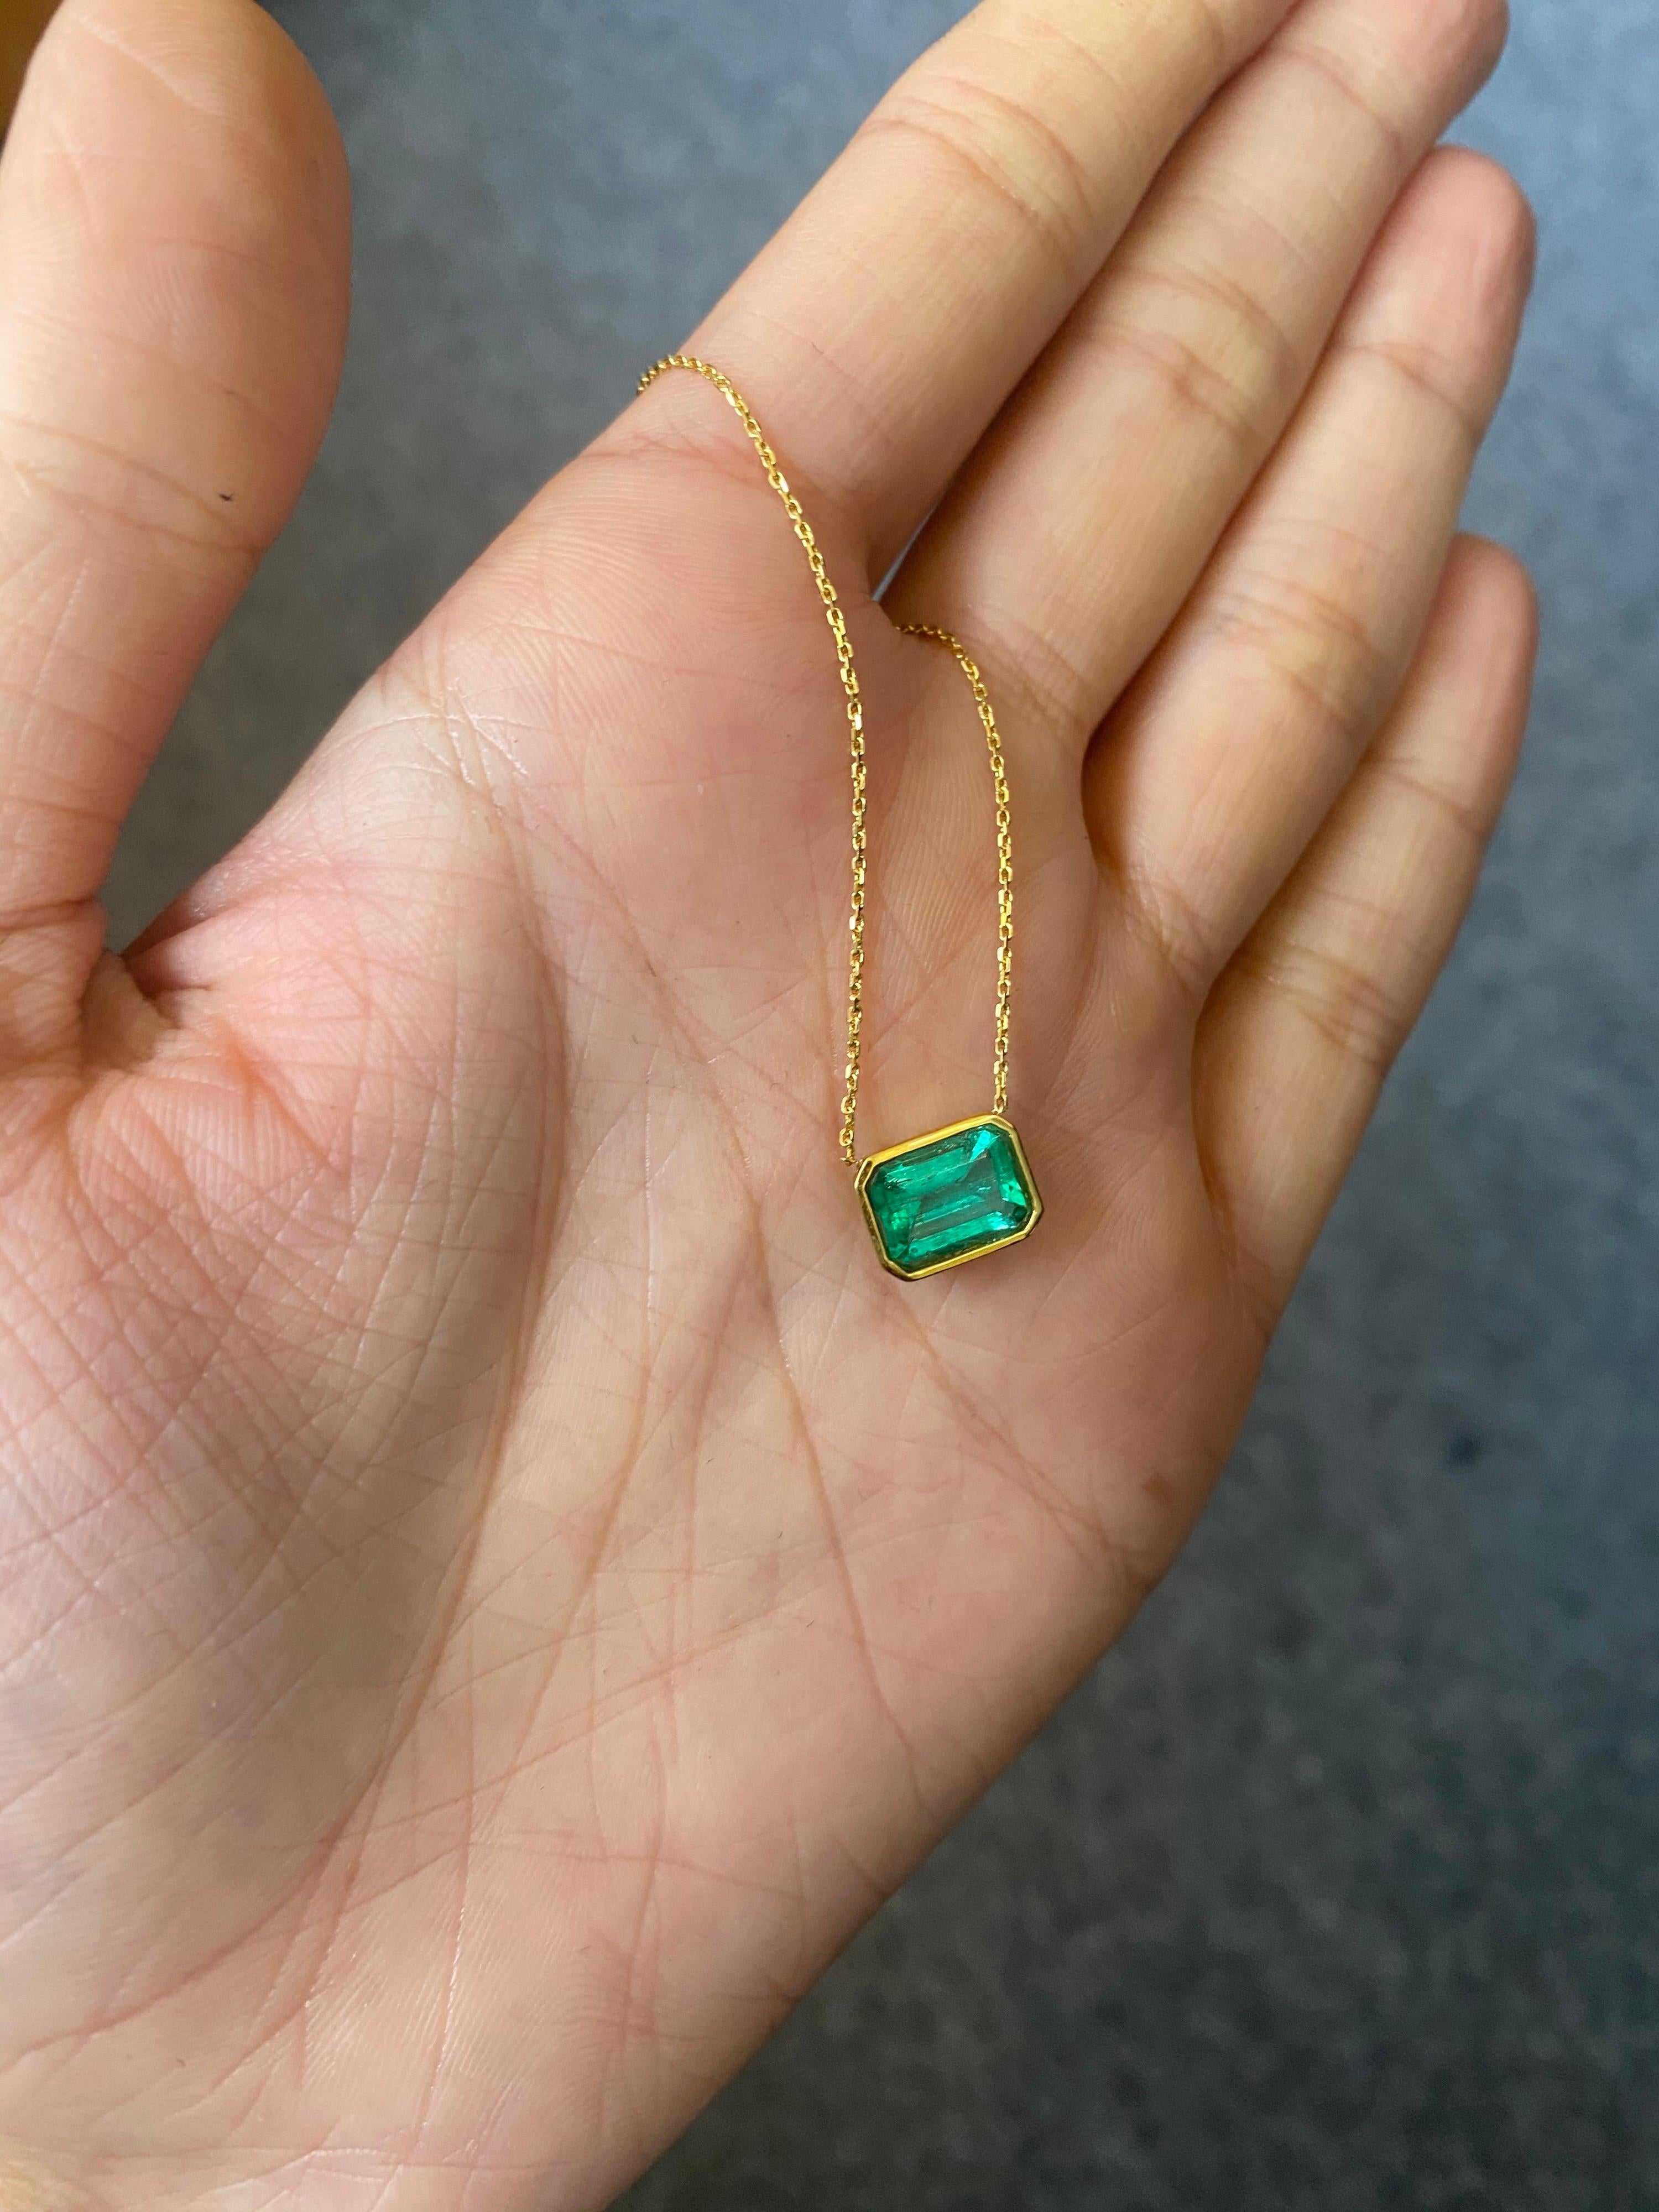 Modern Certified 1.37 Carat Emerald Cut Colombian Emerald Pendant Chain Necklace